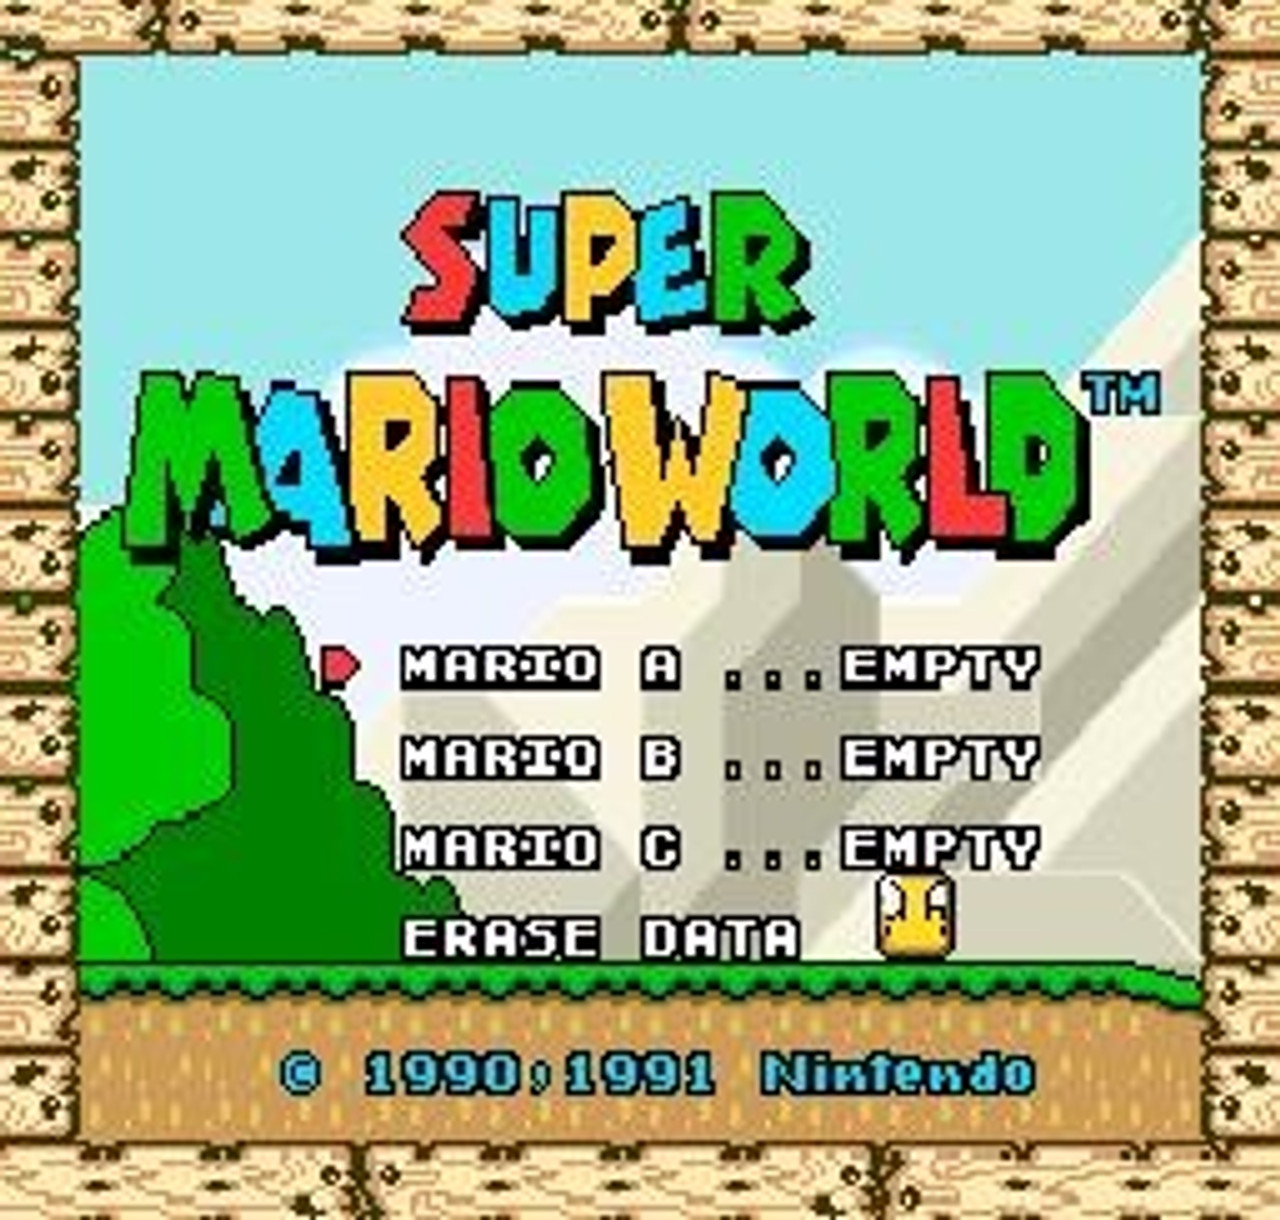 Super Mario World (SNES, 1991) for sale online